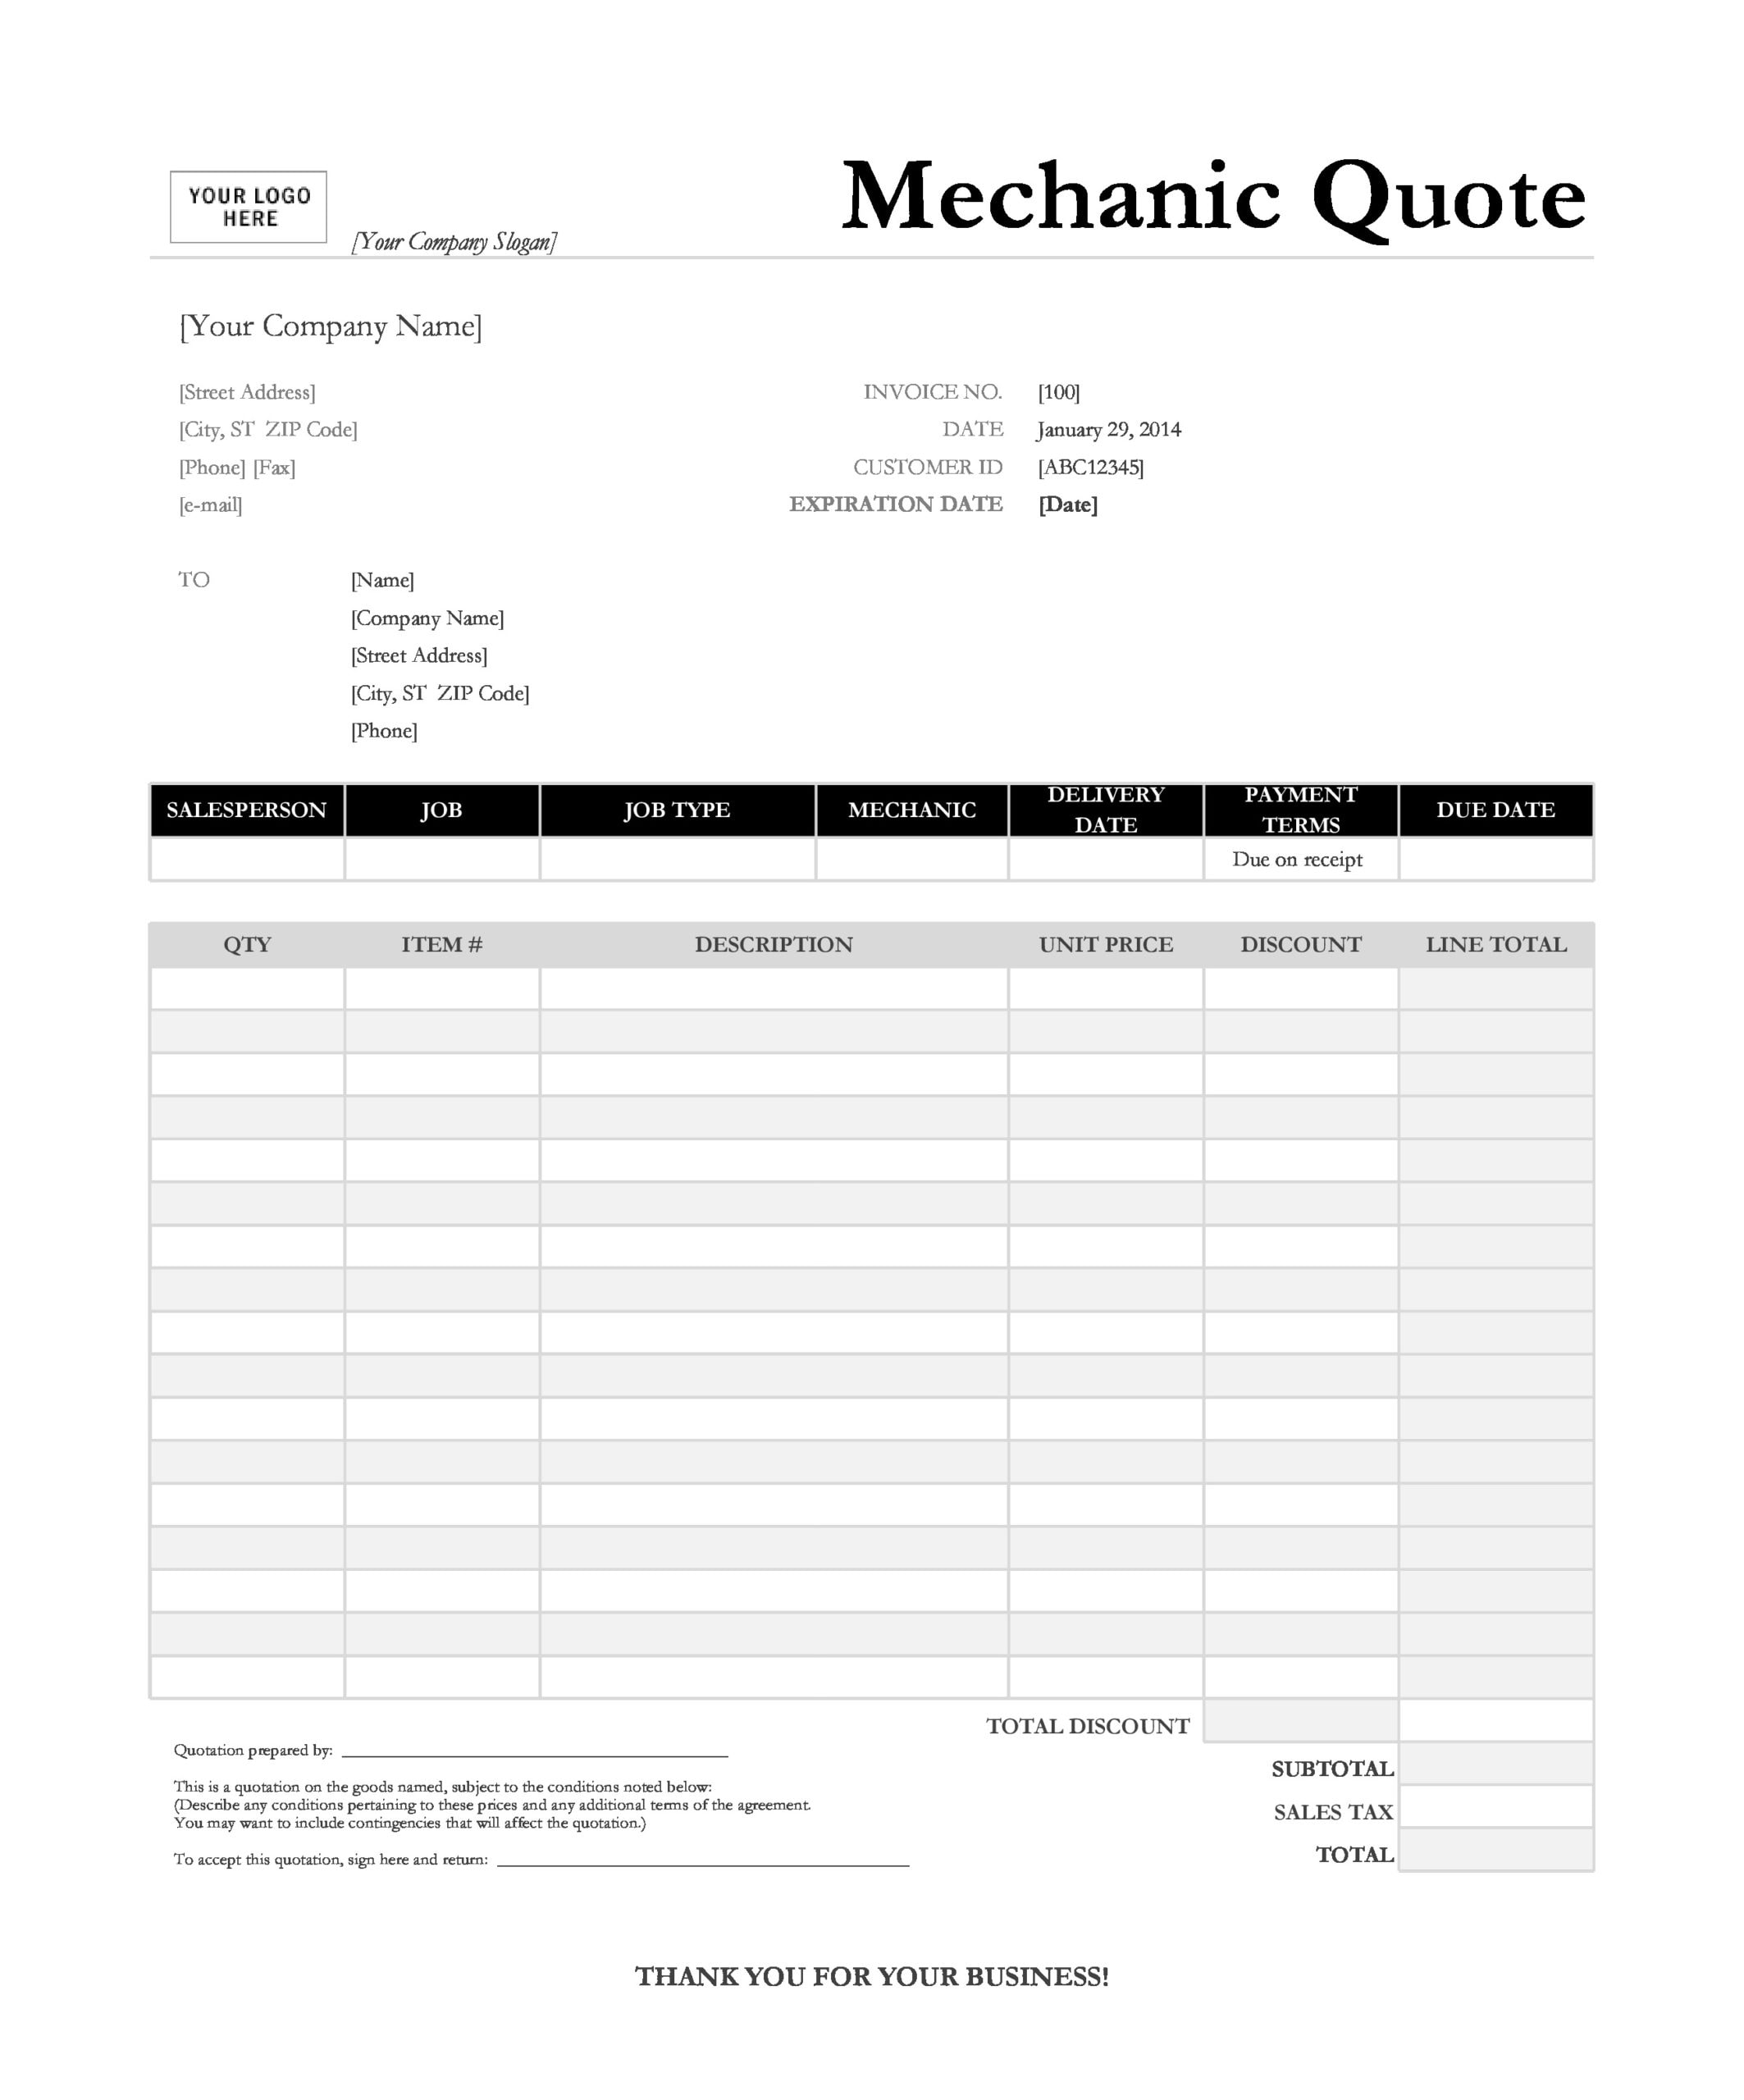 Automotive Invoice Software Free Download Full Version Muslilevel